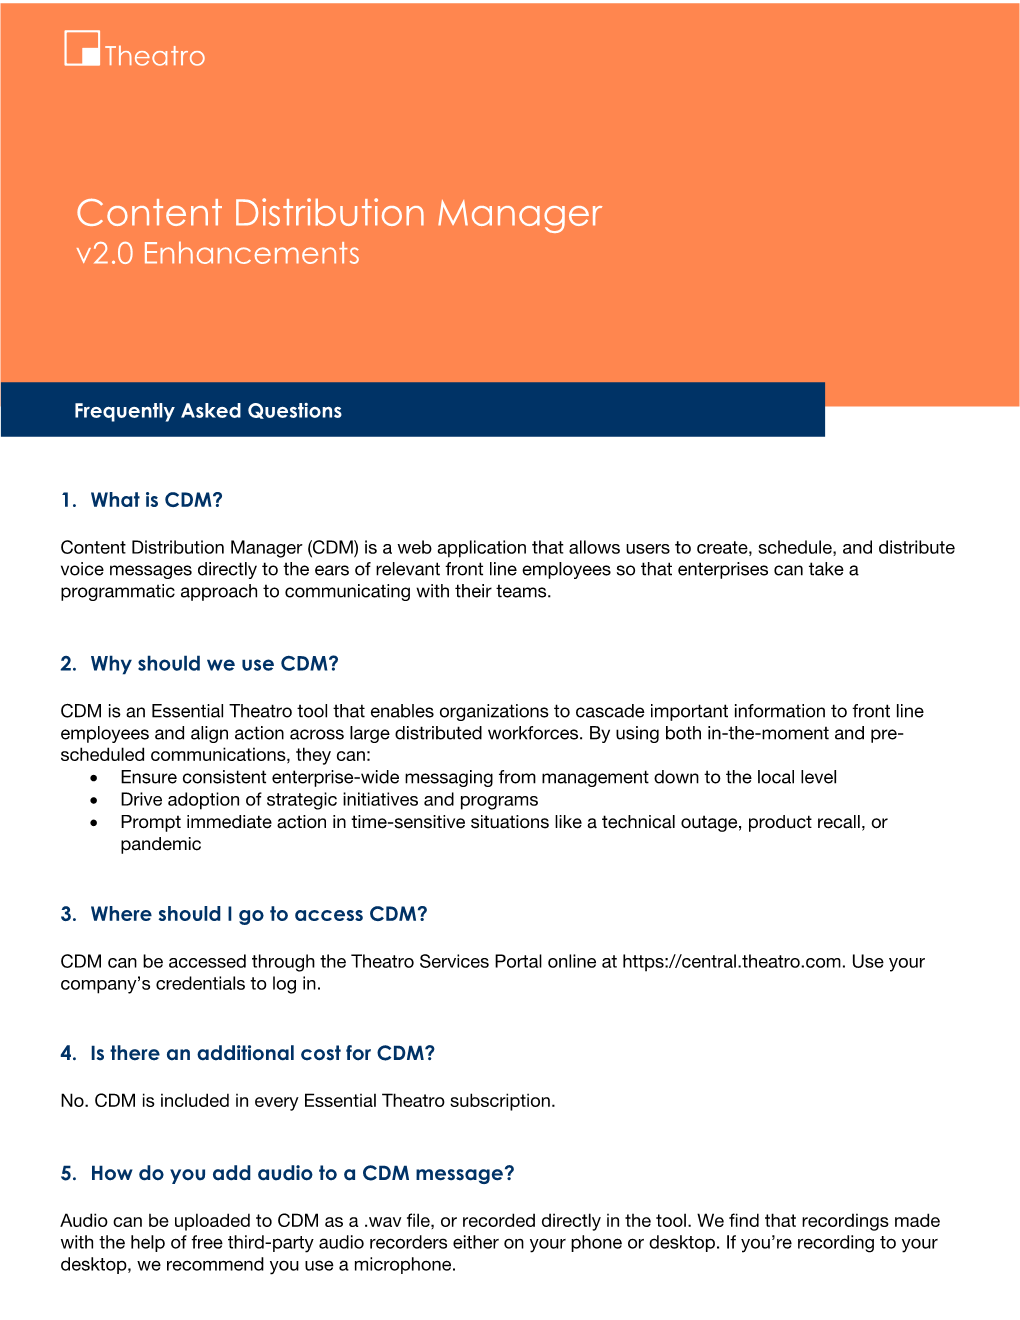 Content Distribution Manager V2.0 Enhancements